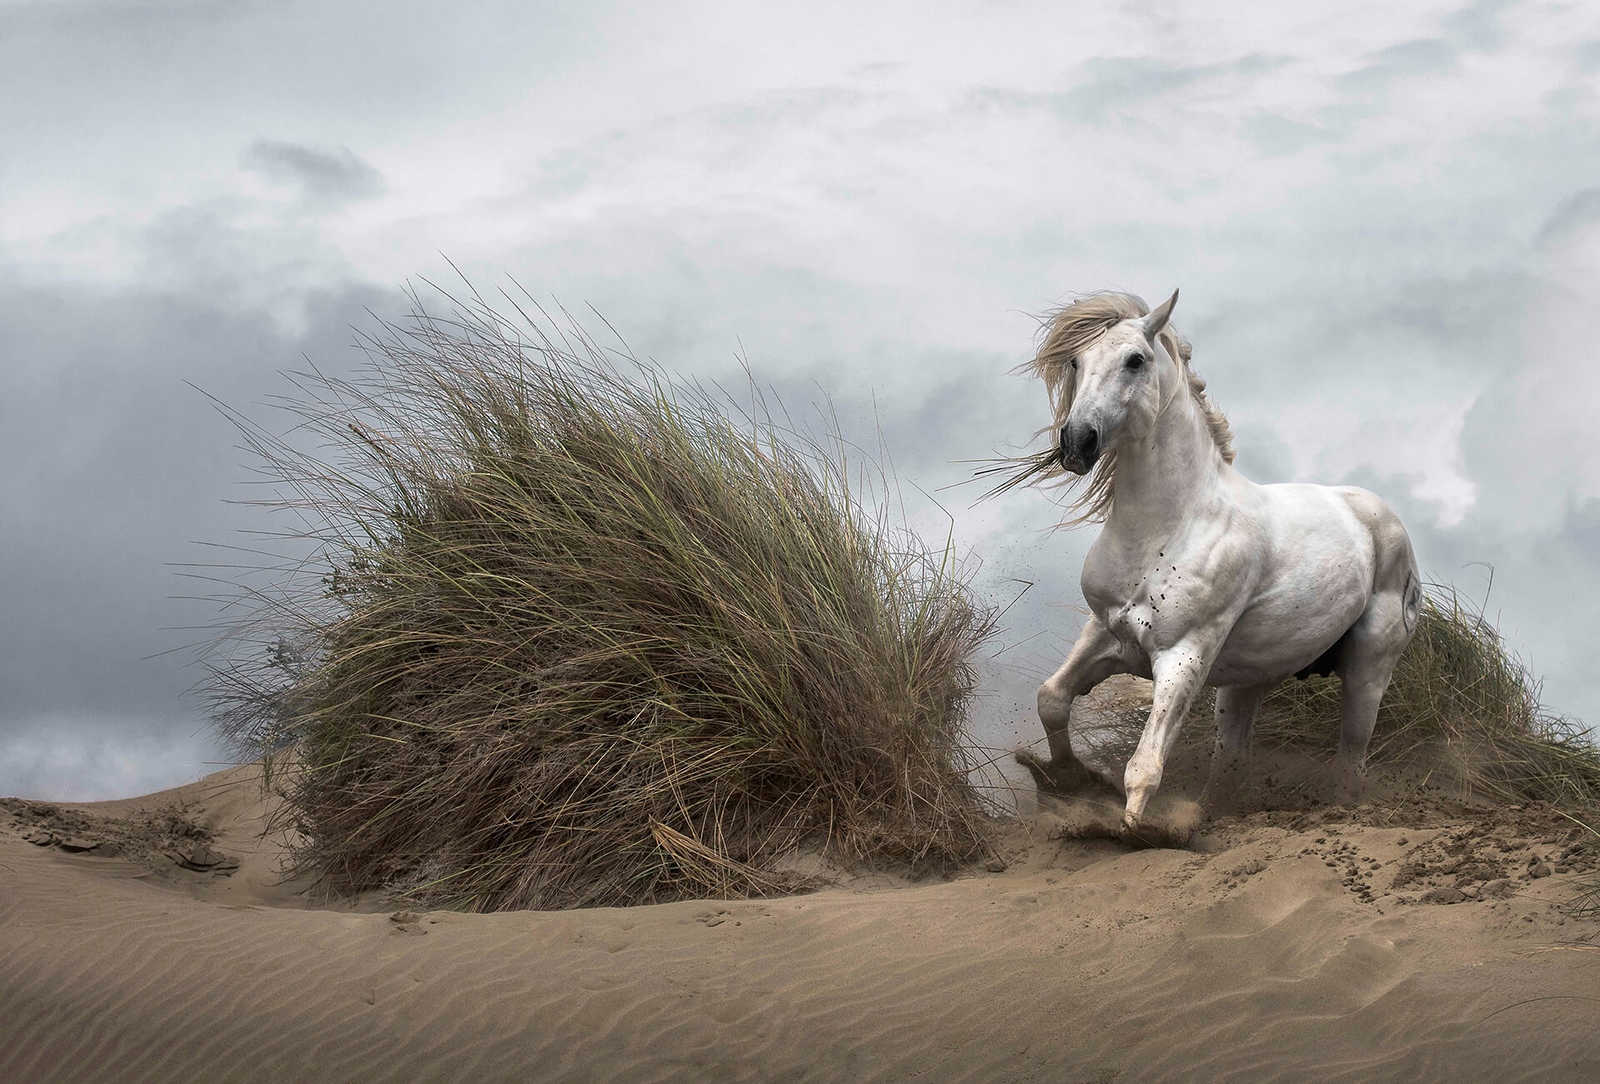         Fototapete Wildpferd am Strand – Weiß, Beige, Grau
    